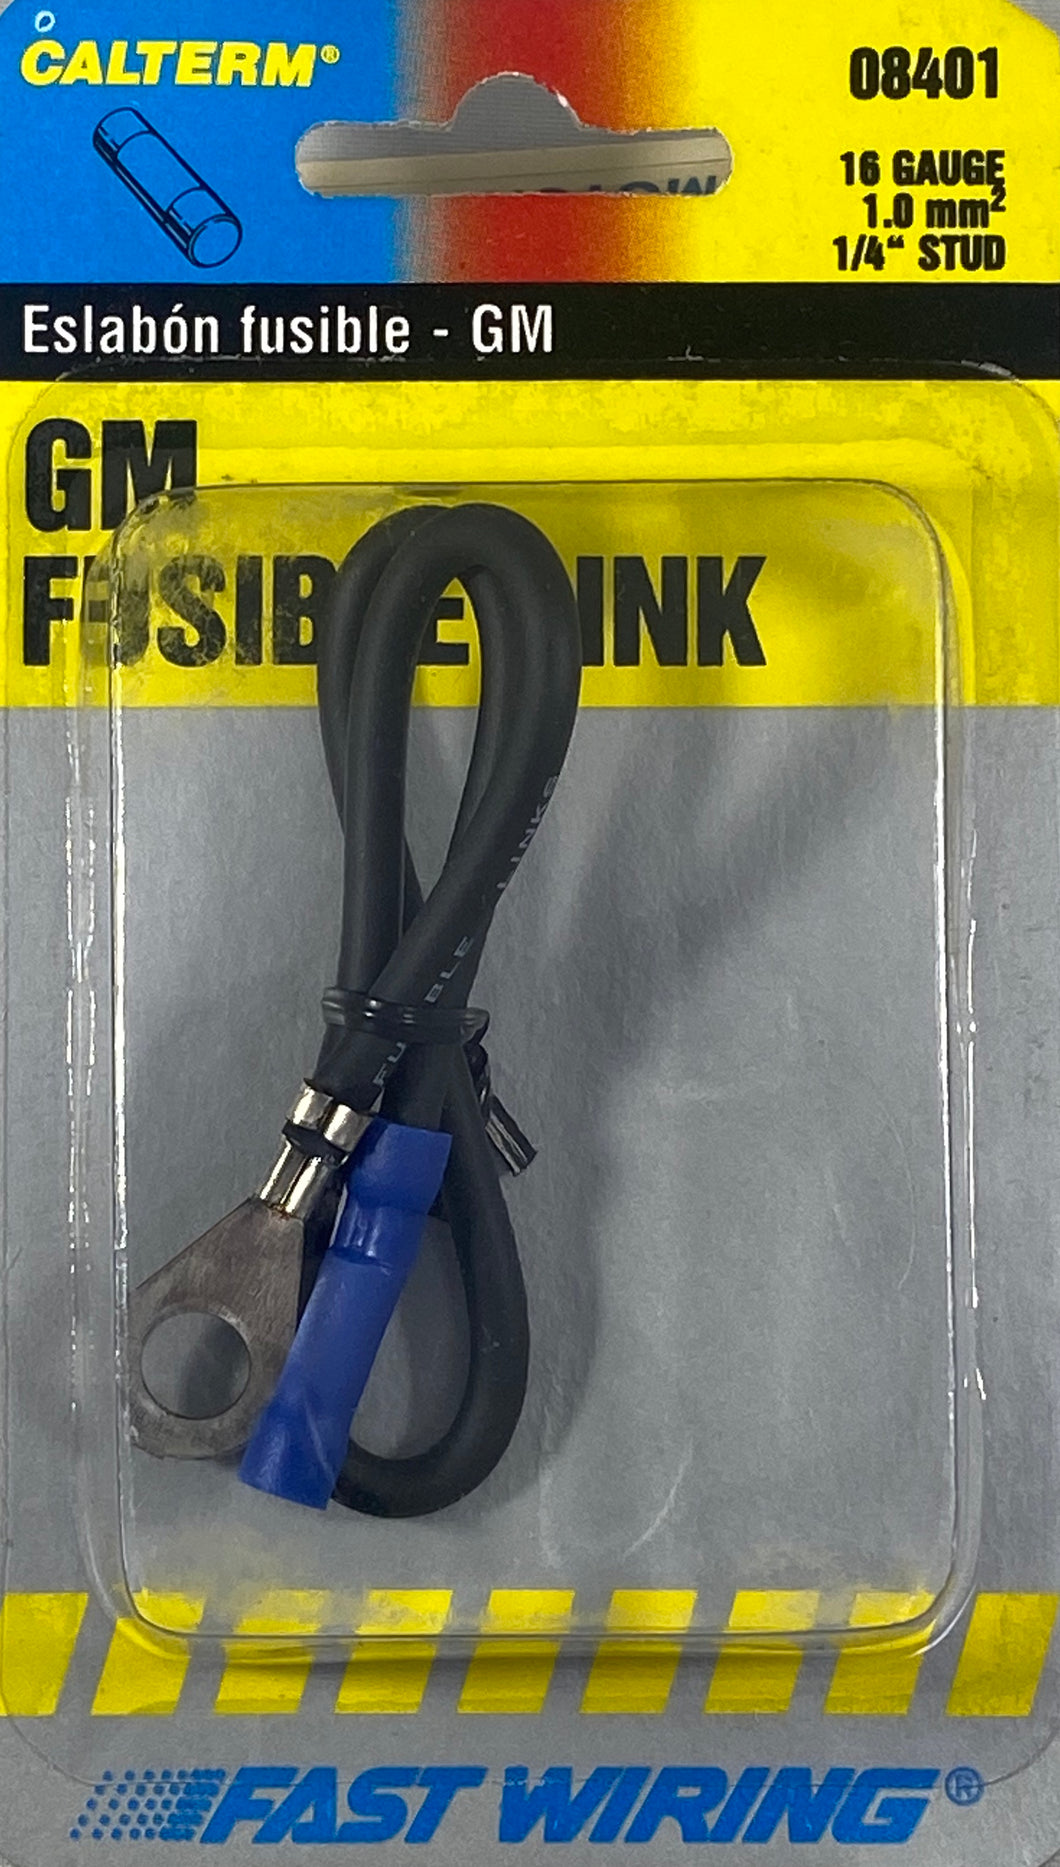 GM FUSIBLE LINK - 16 GAUGE CALTERM 08401